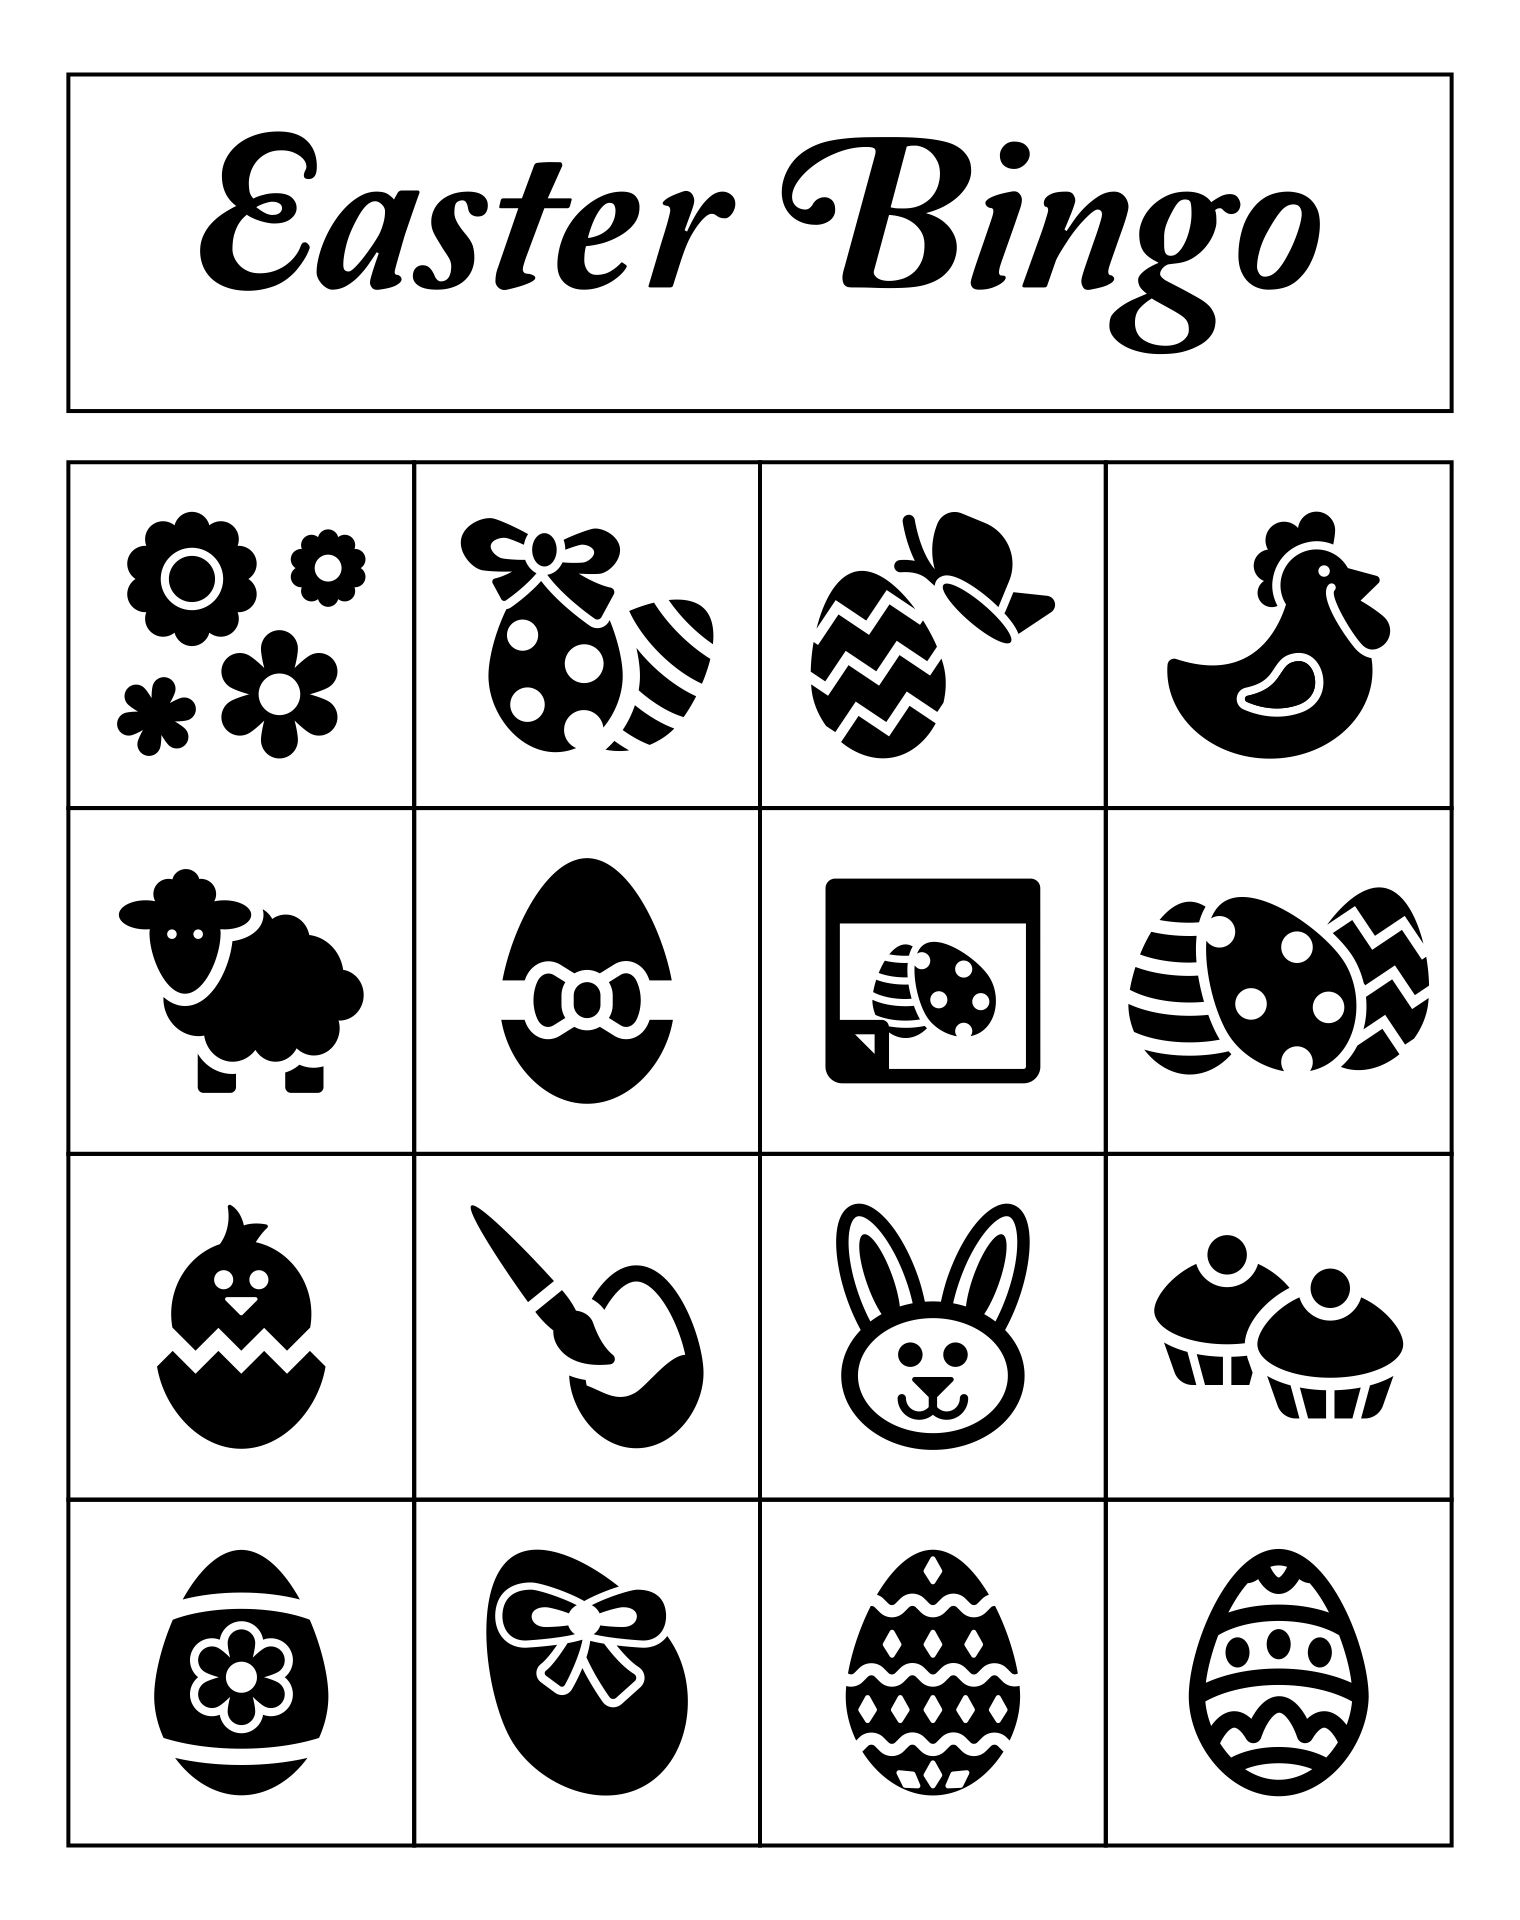 Black and White Easter Bingo Printable Cards